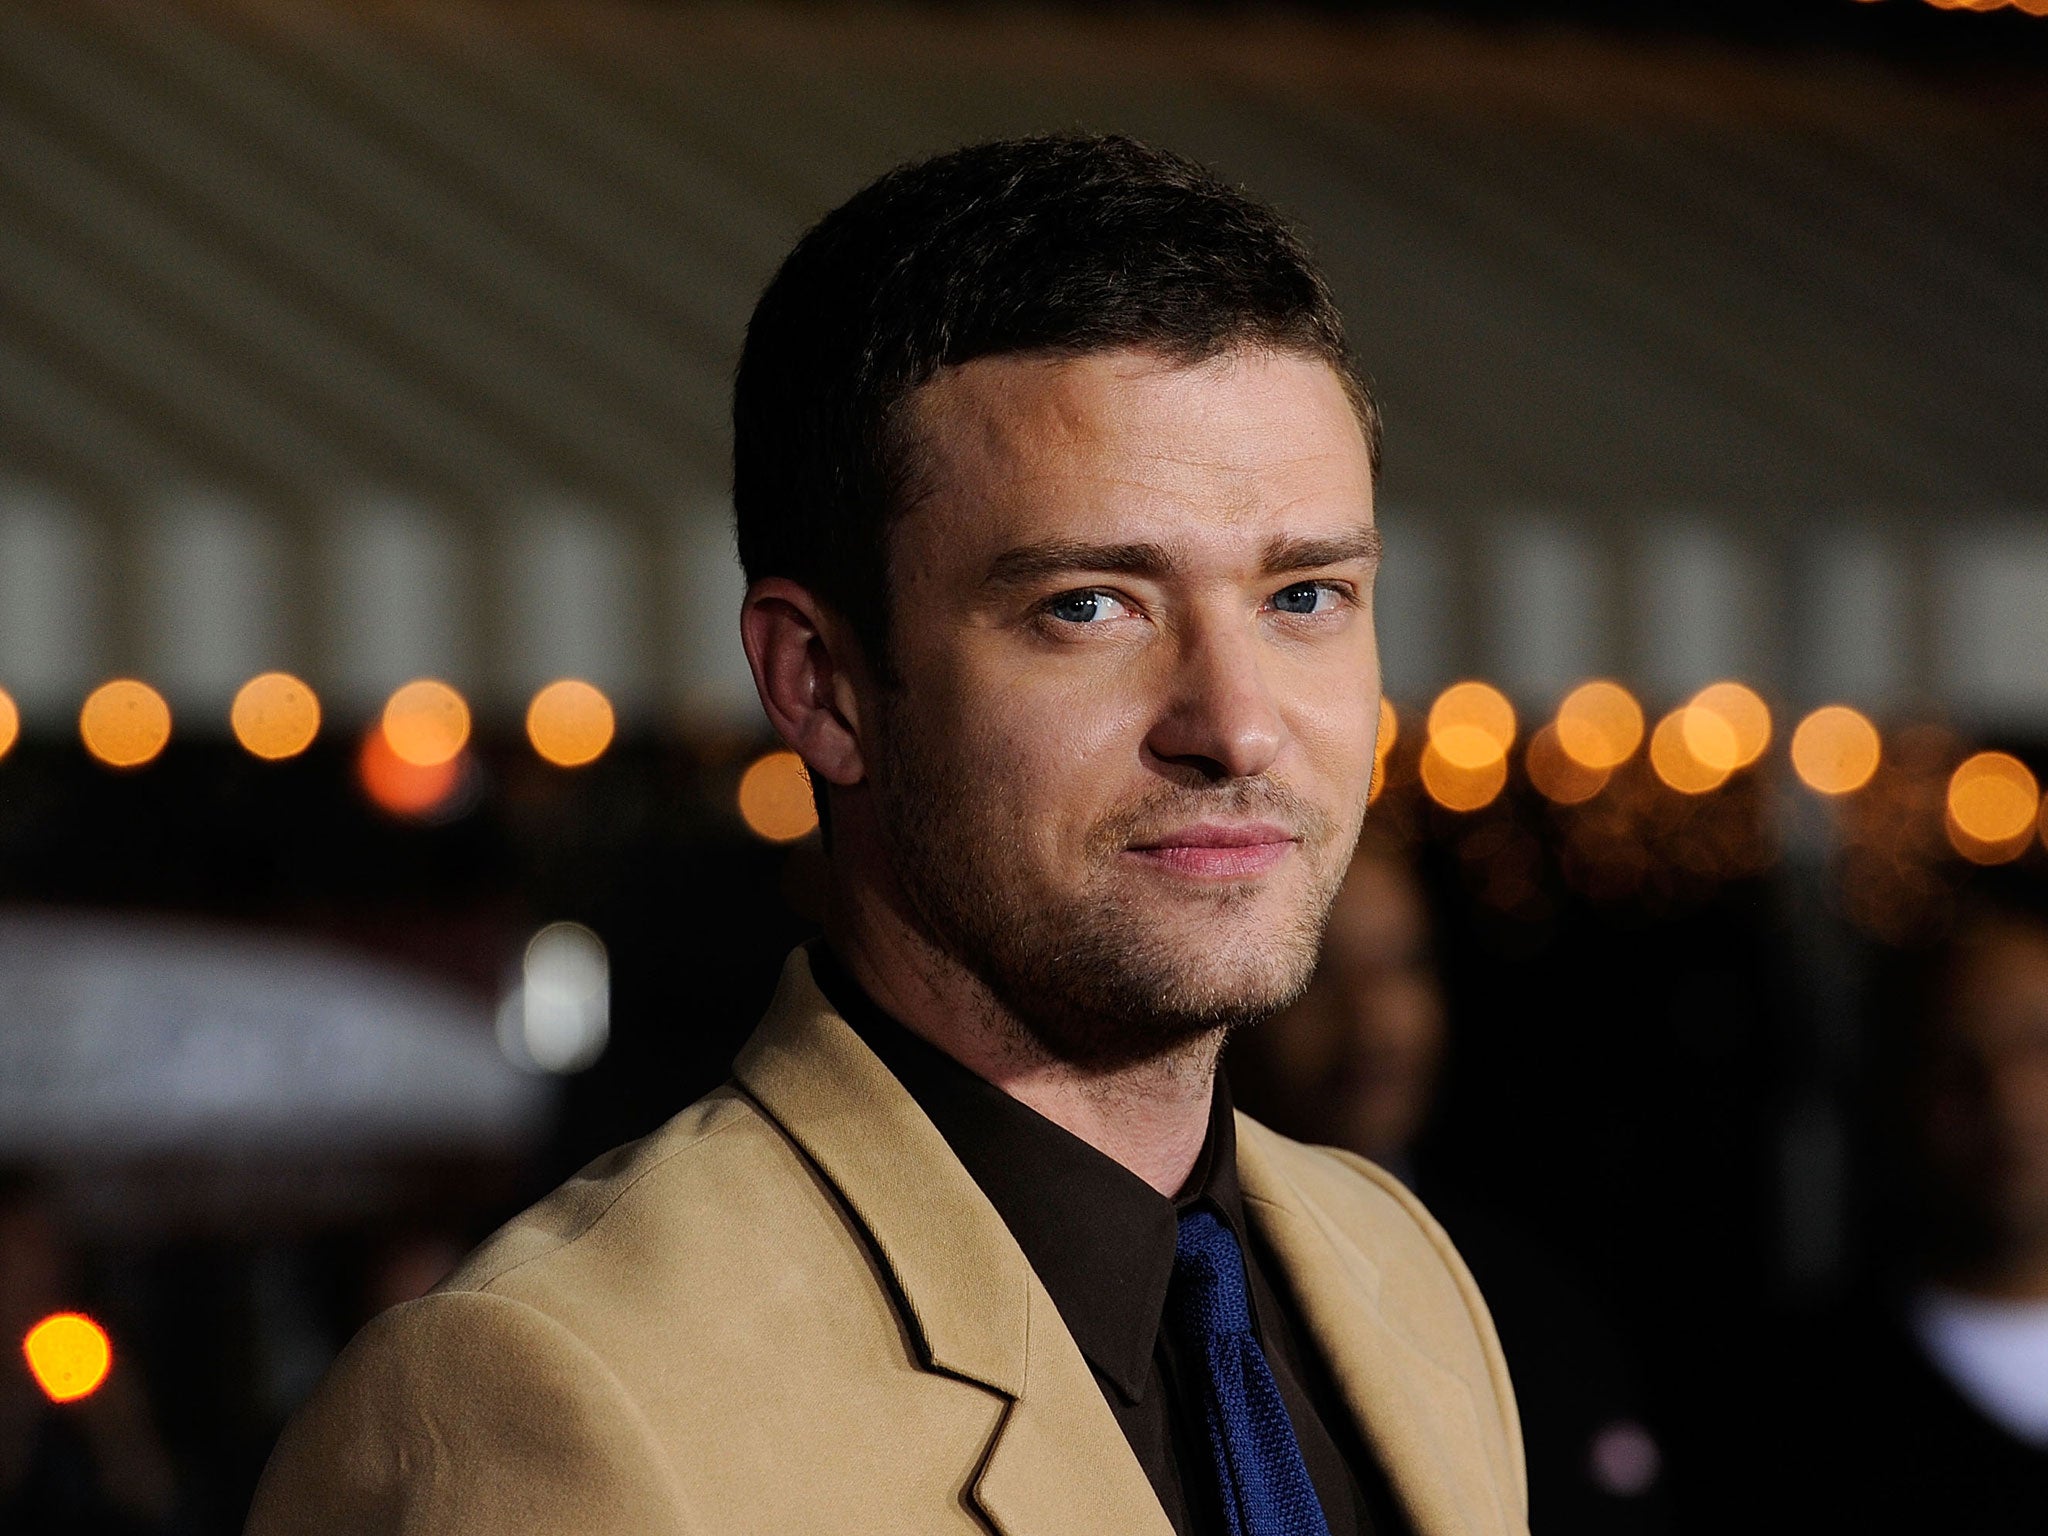 Justin Timberlake's career timeline: How did Justin Timberlake get